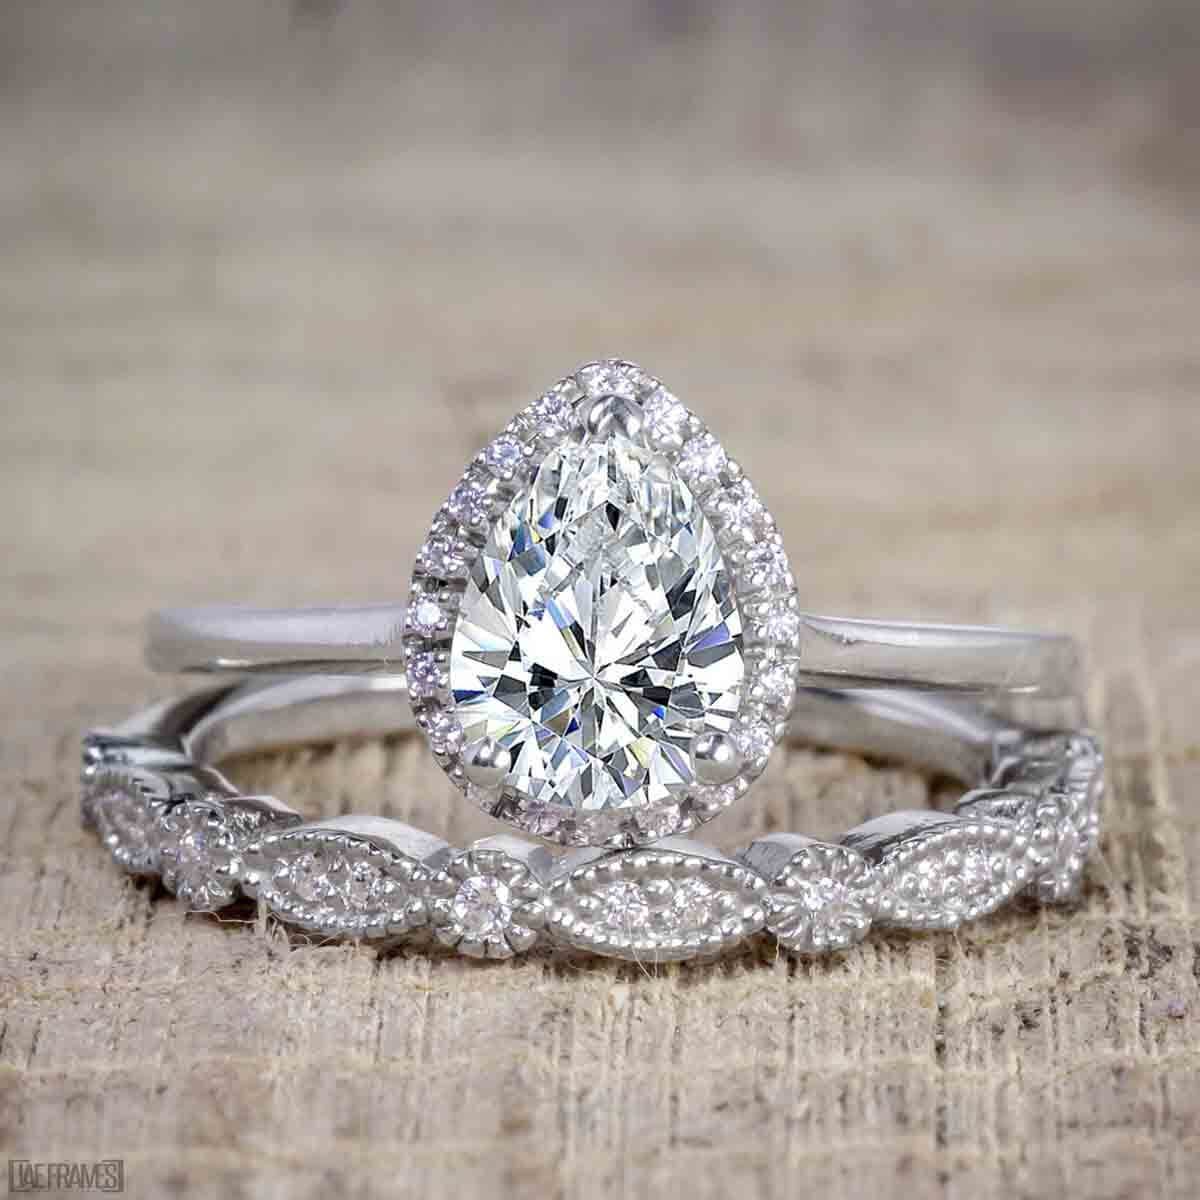 JeenJewels Best Seller Pear Cut 2.25 Carat Moissanite Diamond Wedding Trio Ring Set with 18k Gold Plating